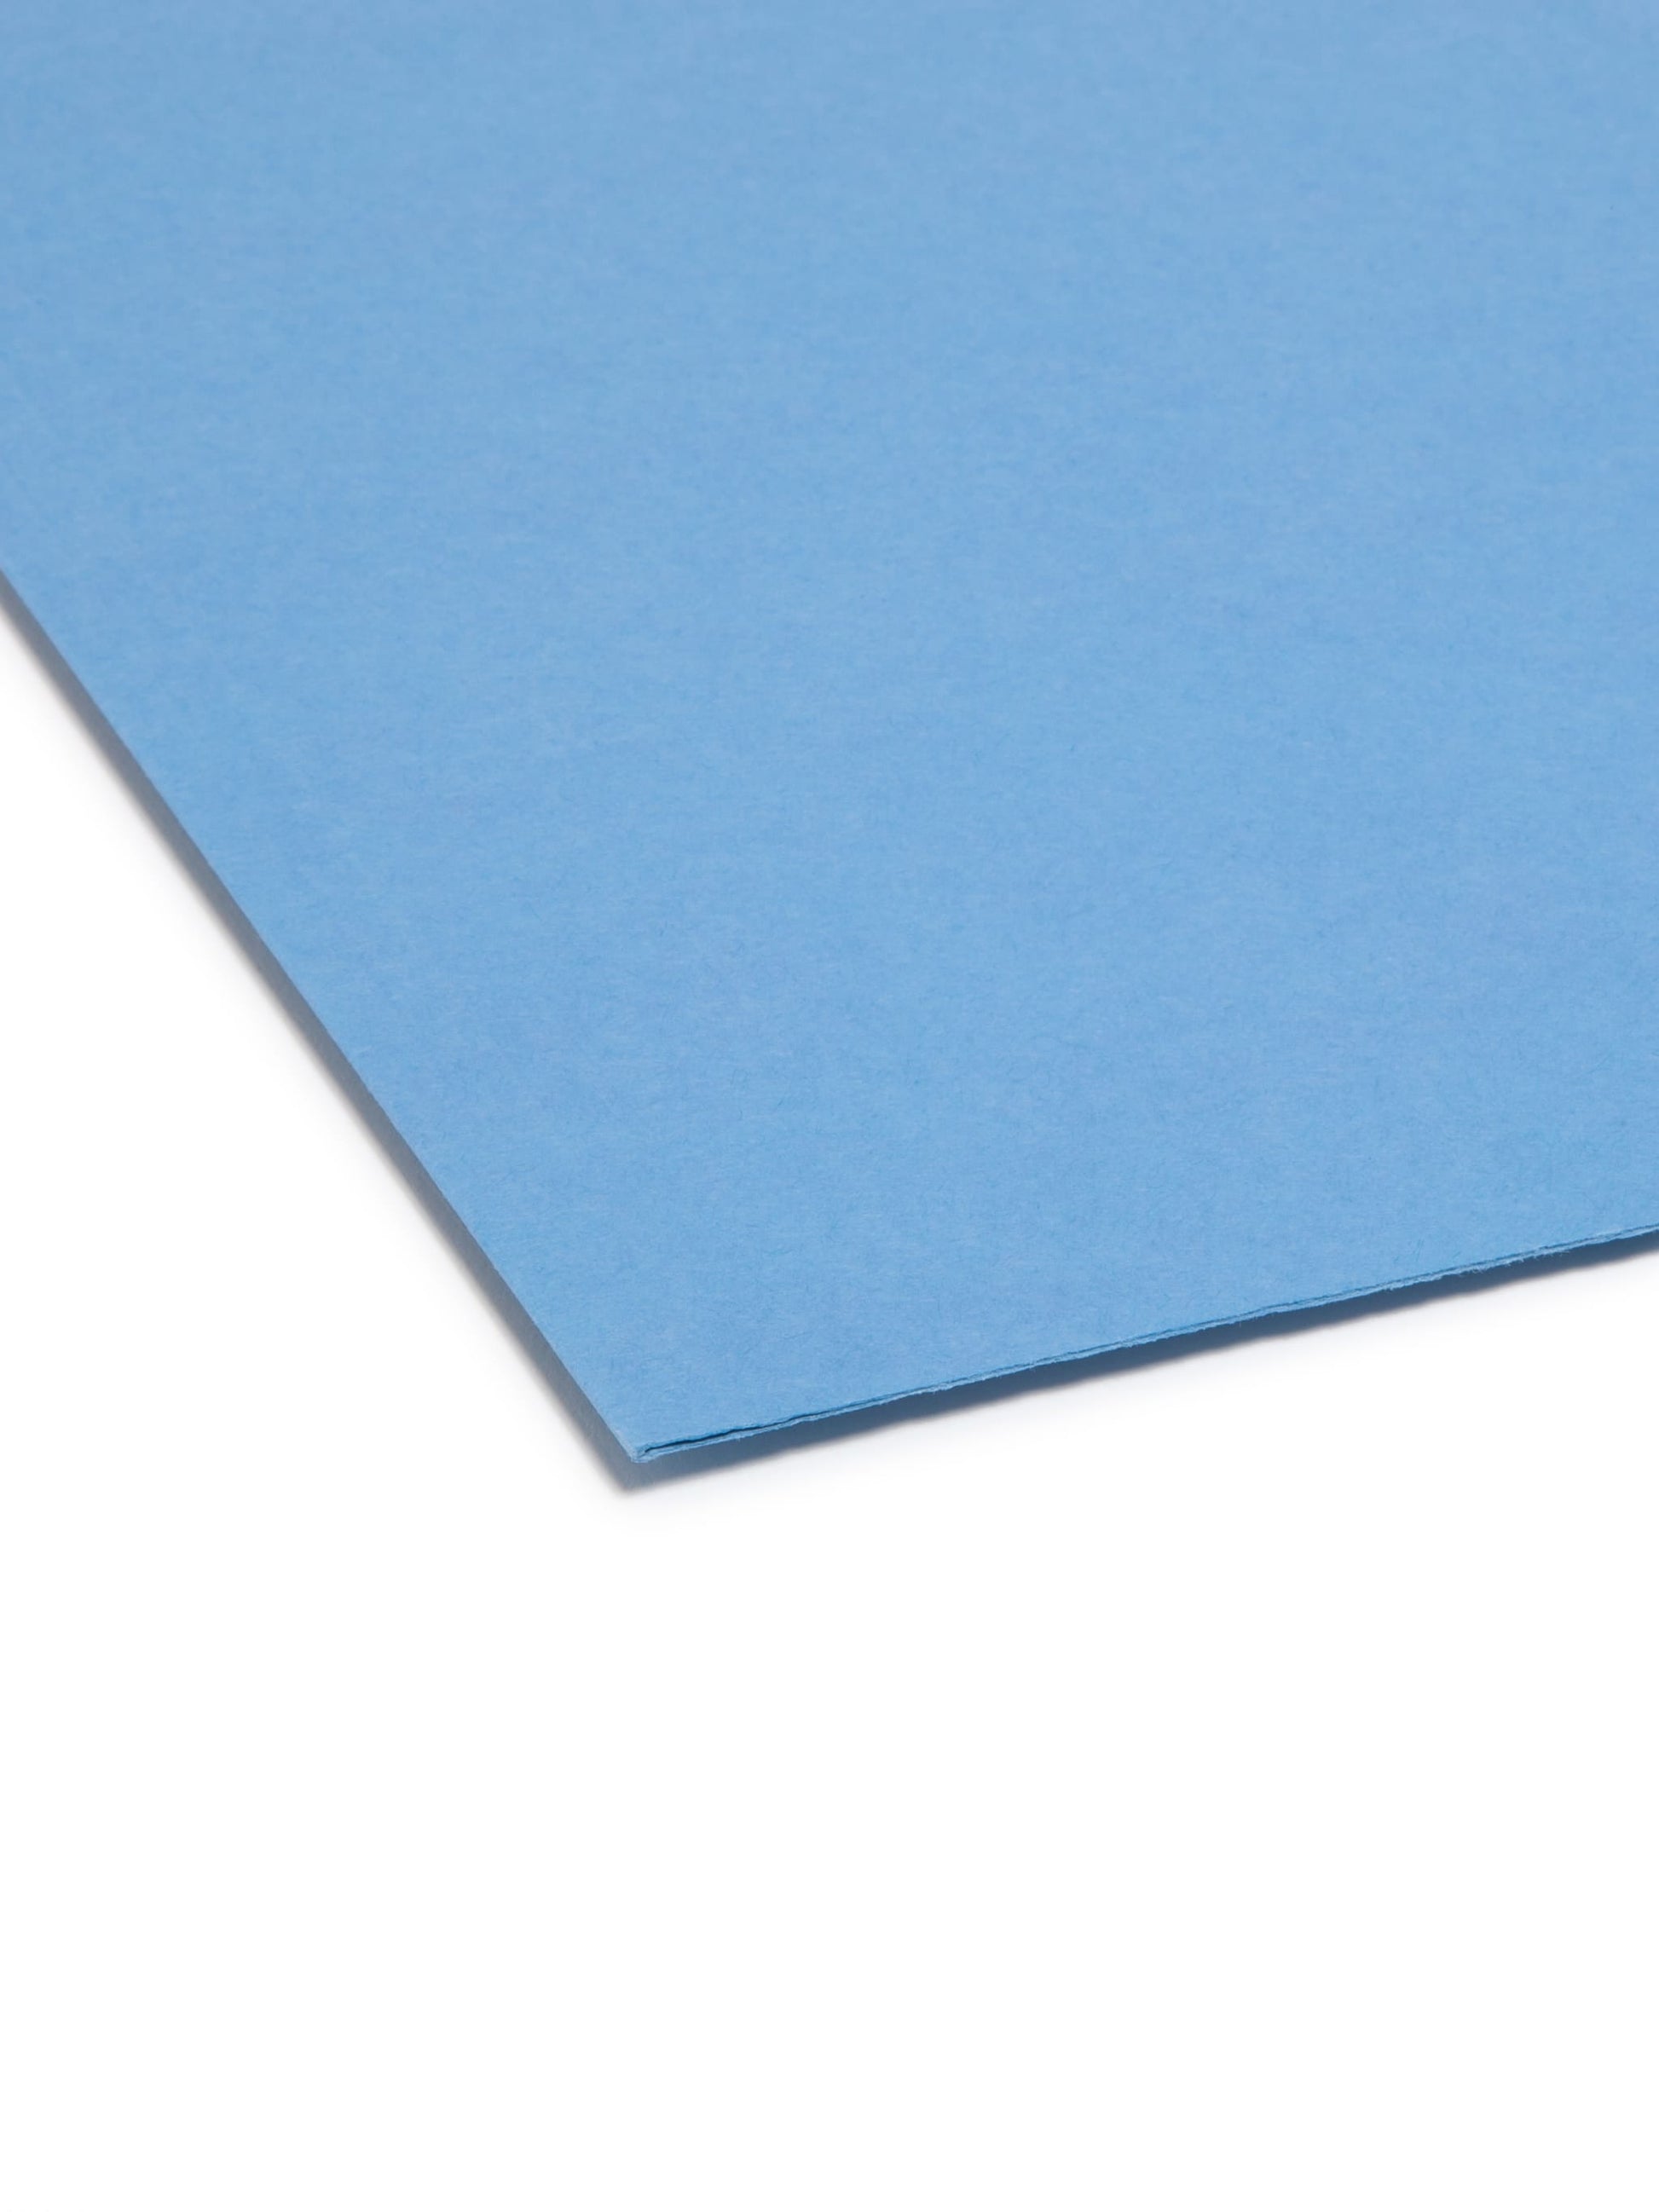 Reinforced Tab File Folders, 1/3-Cut Tab, Blue Color, Legal Size, Set of 100, 086486170345